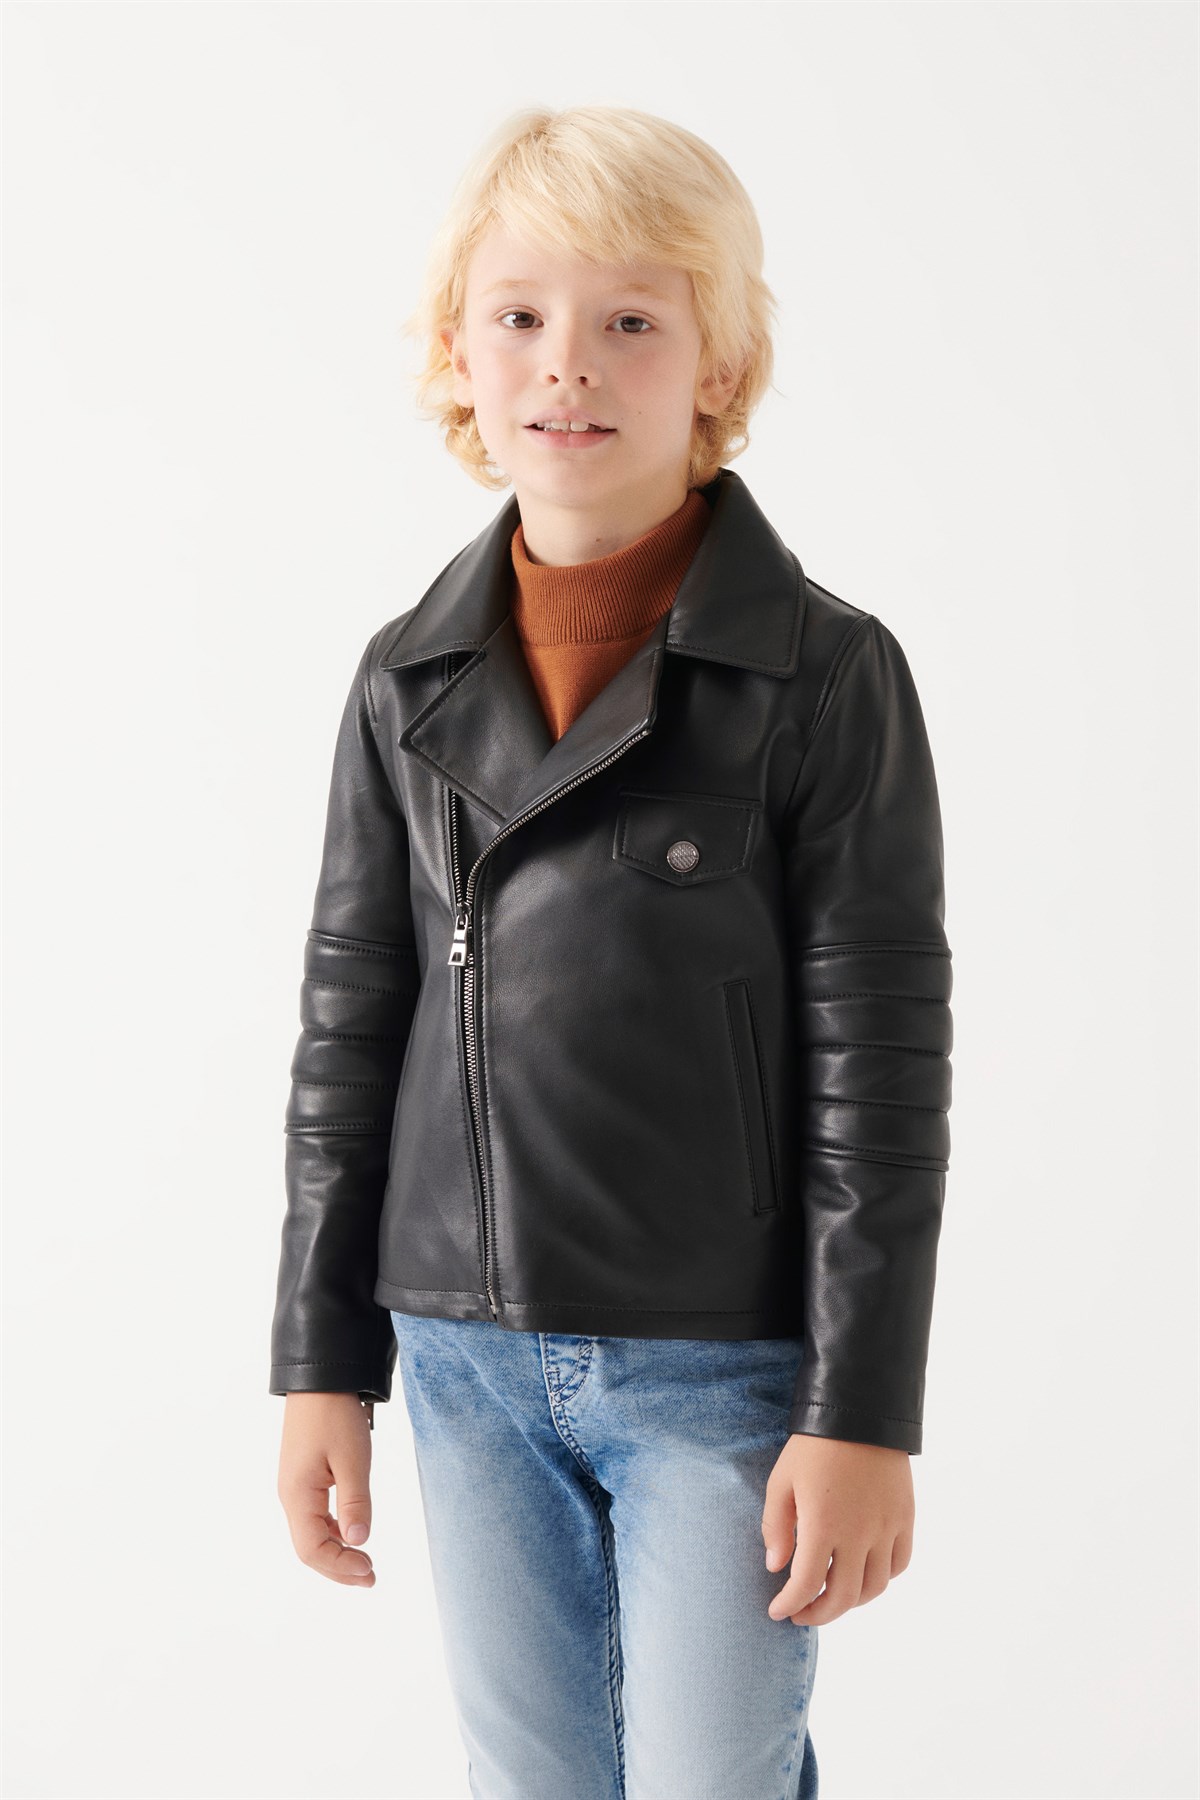 JONNY Boys Black Leather Jacket | Boys Leather and Shearling Jacket & Coat